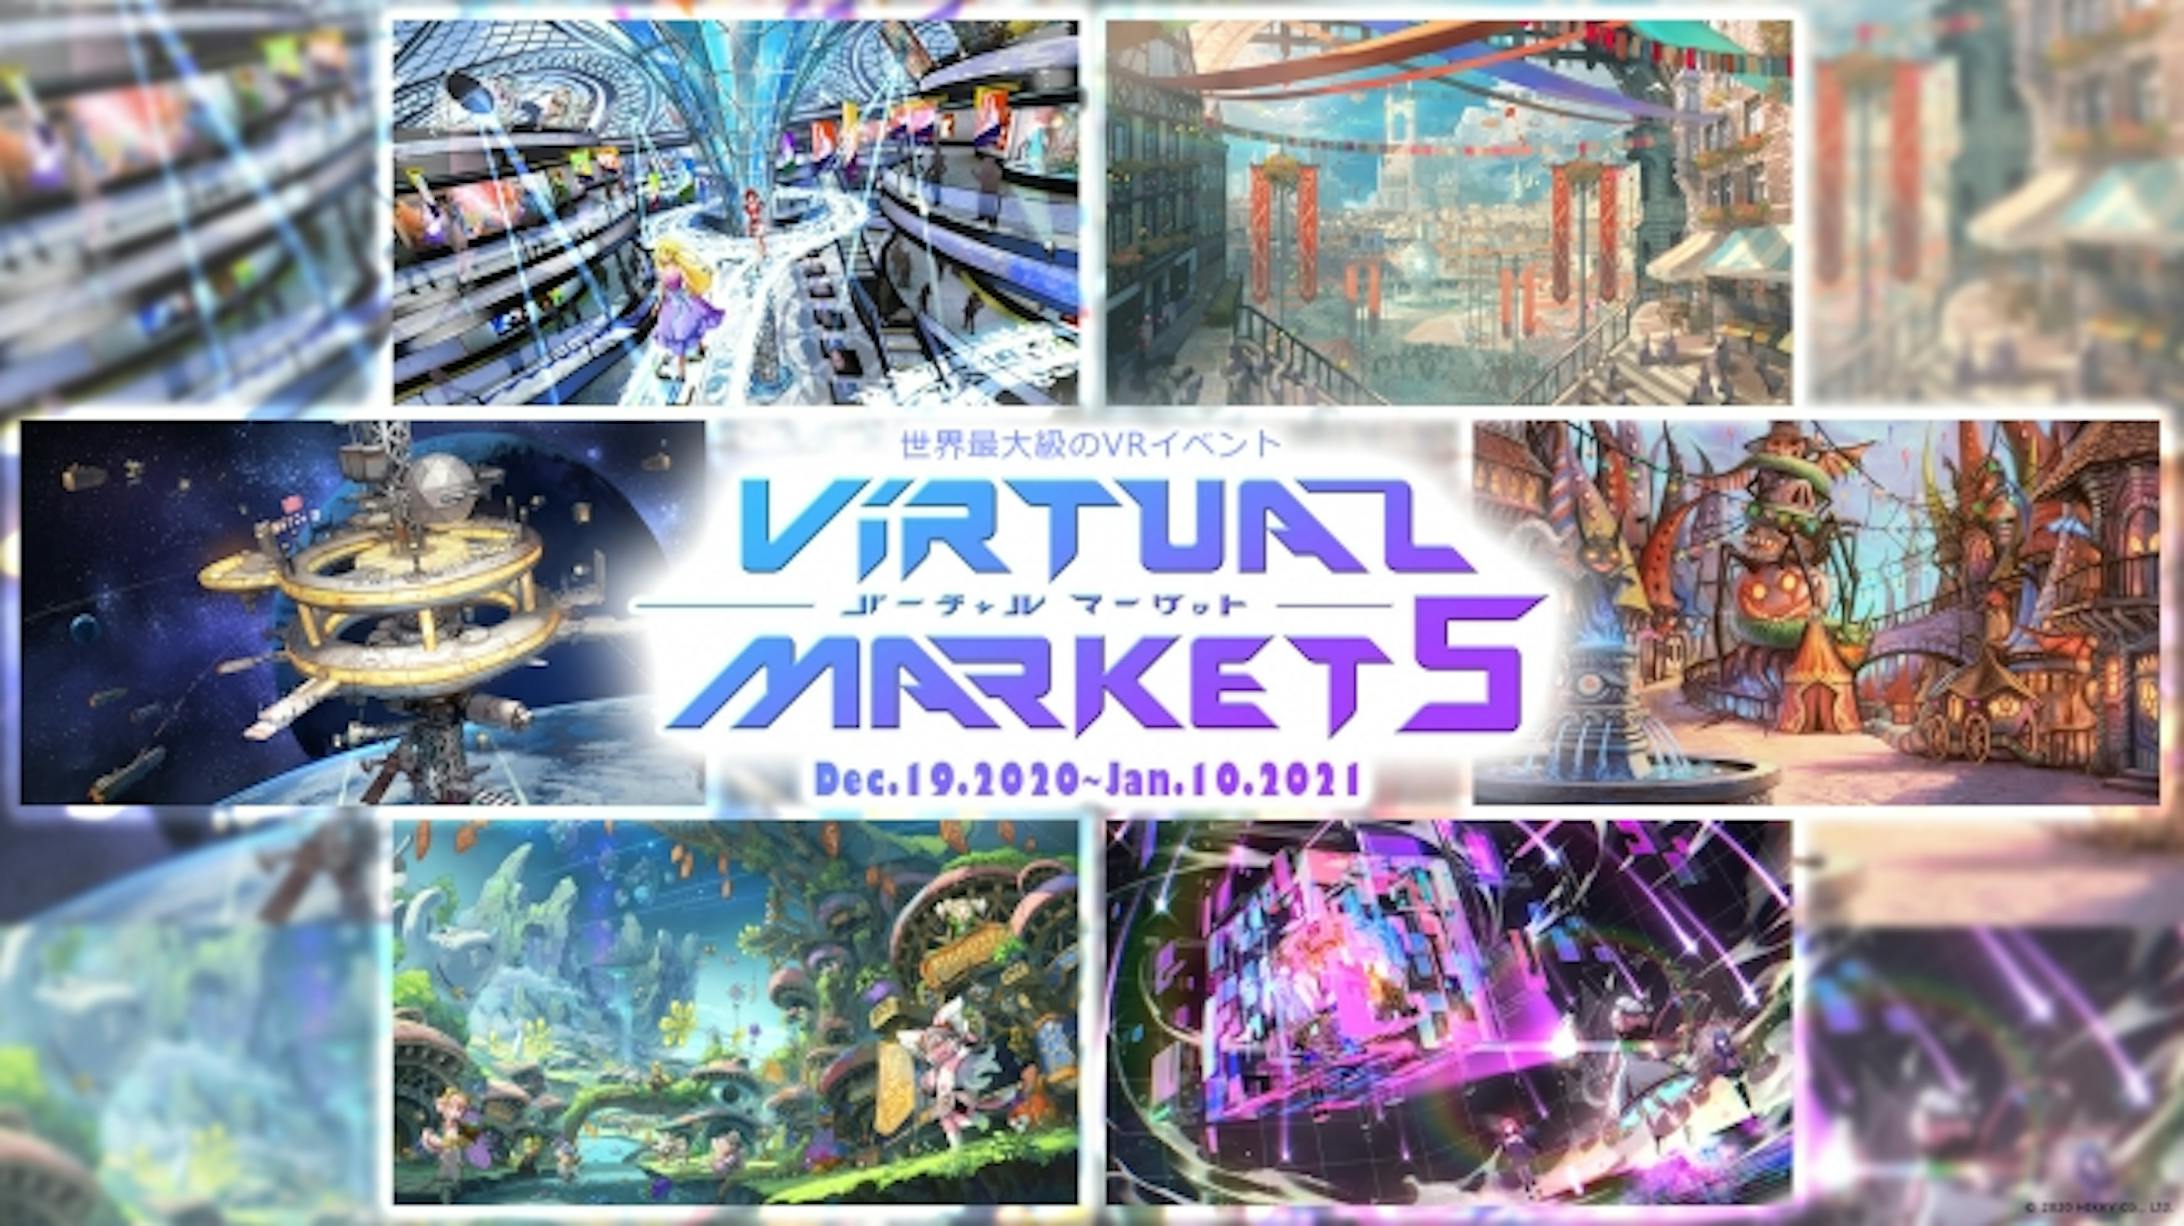 「VIRTUALMARKET 5」 Virtual Market Cafe アバターワーク VRスタッフ-1